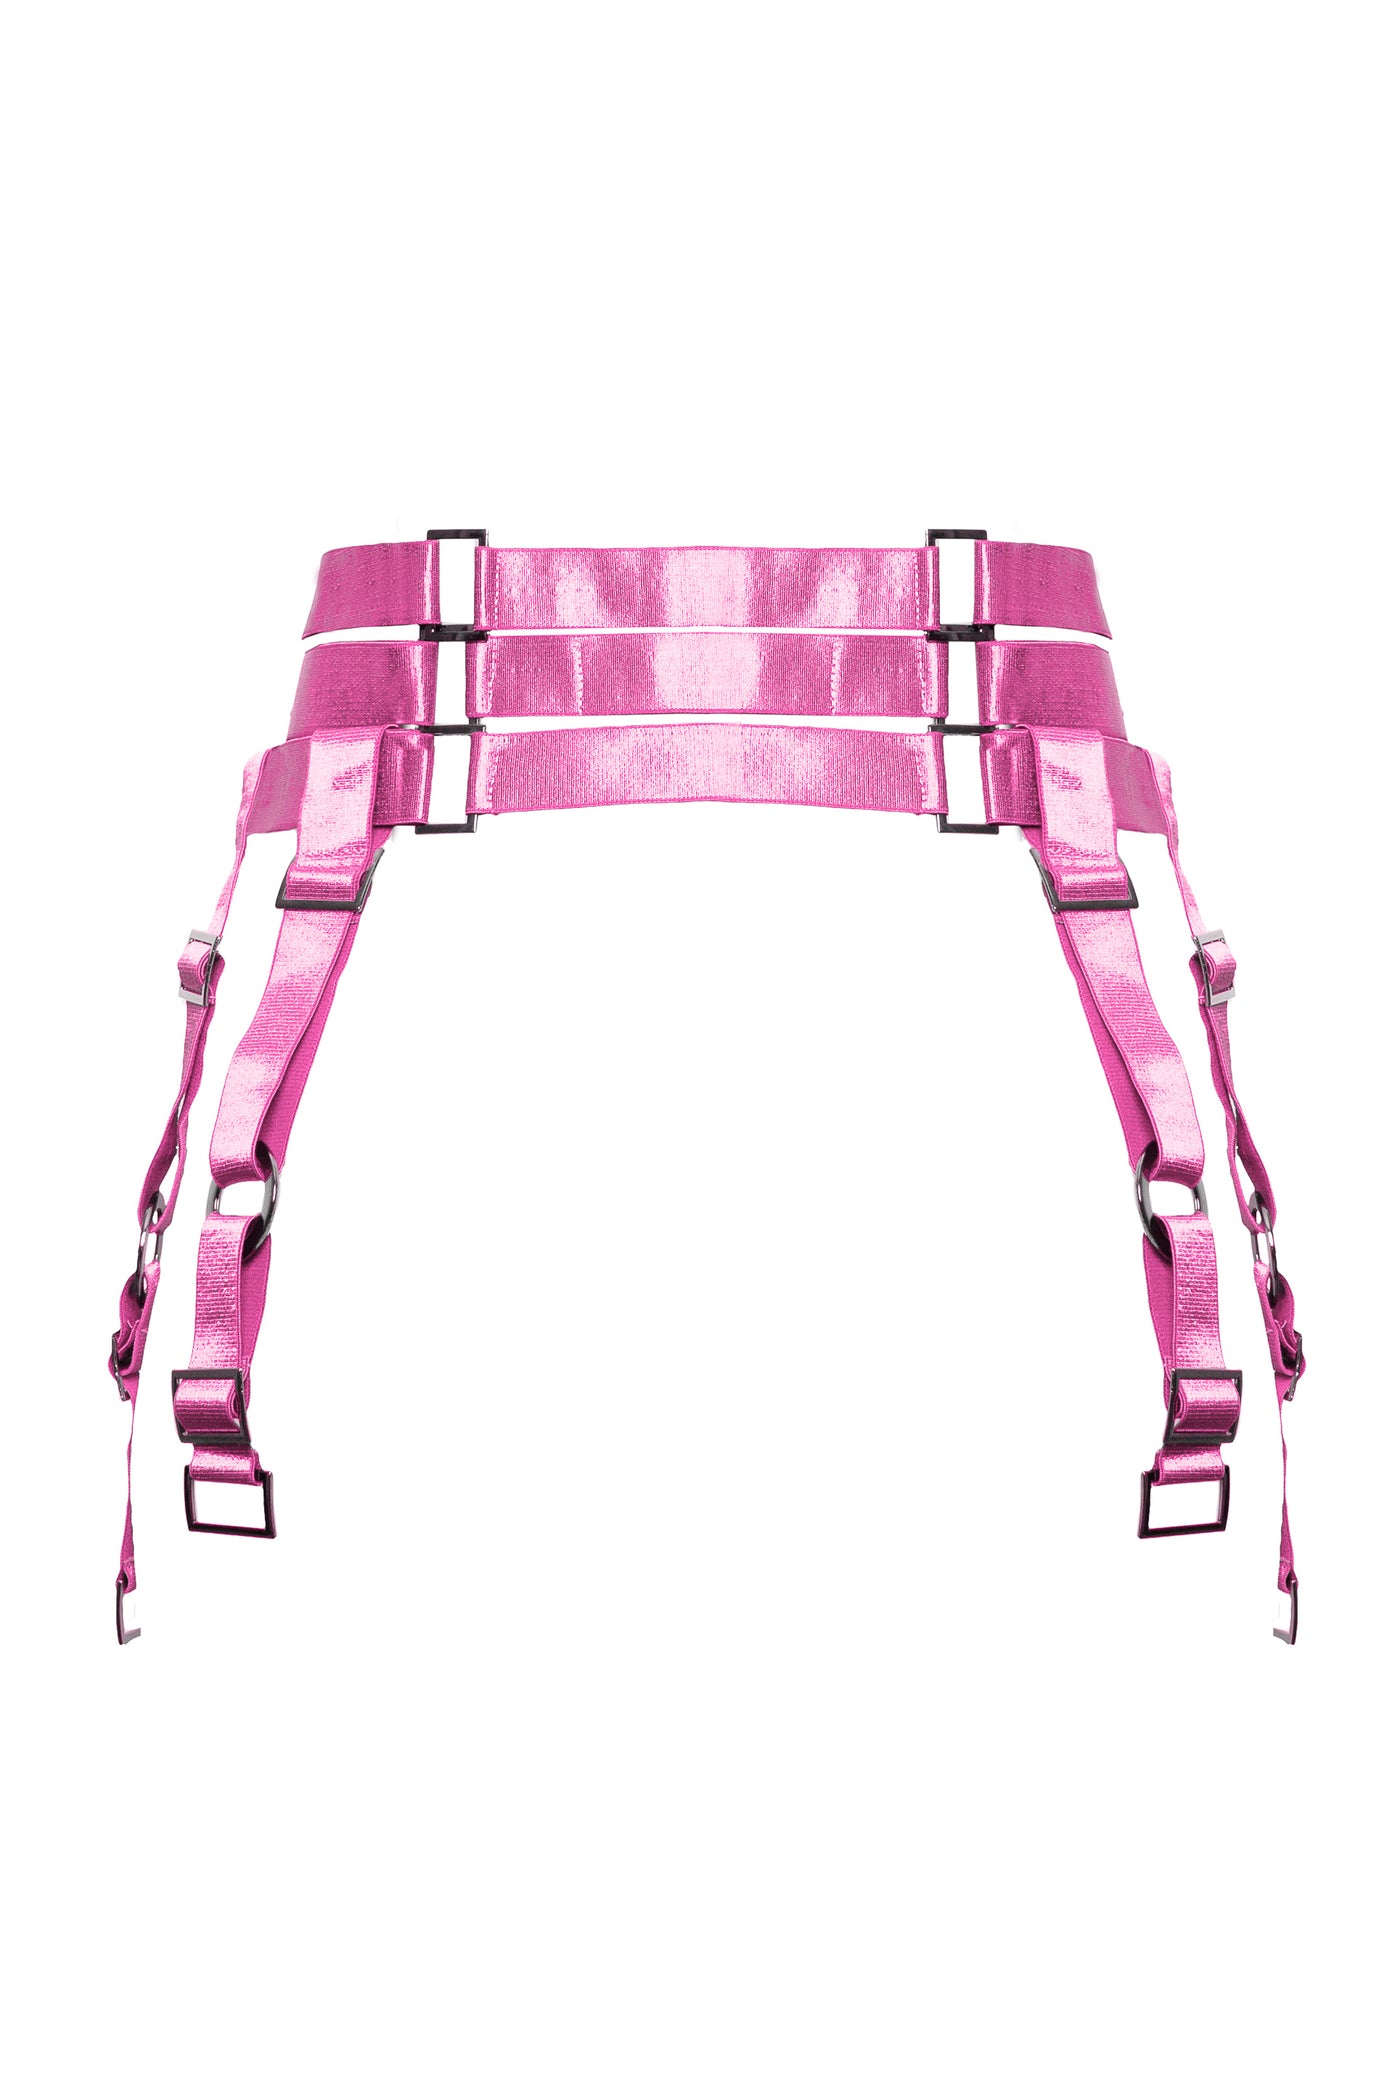 Goetia Garter Belt - Candy Pink